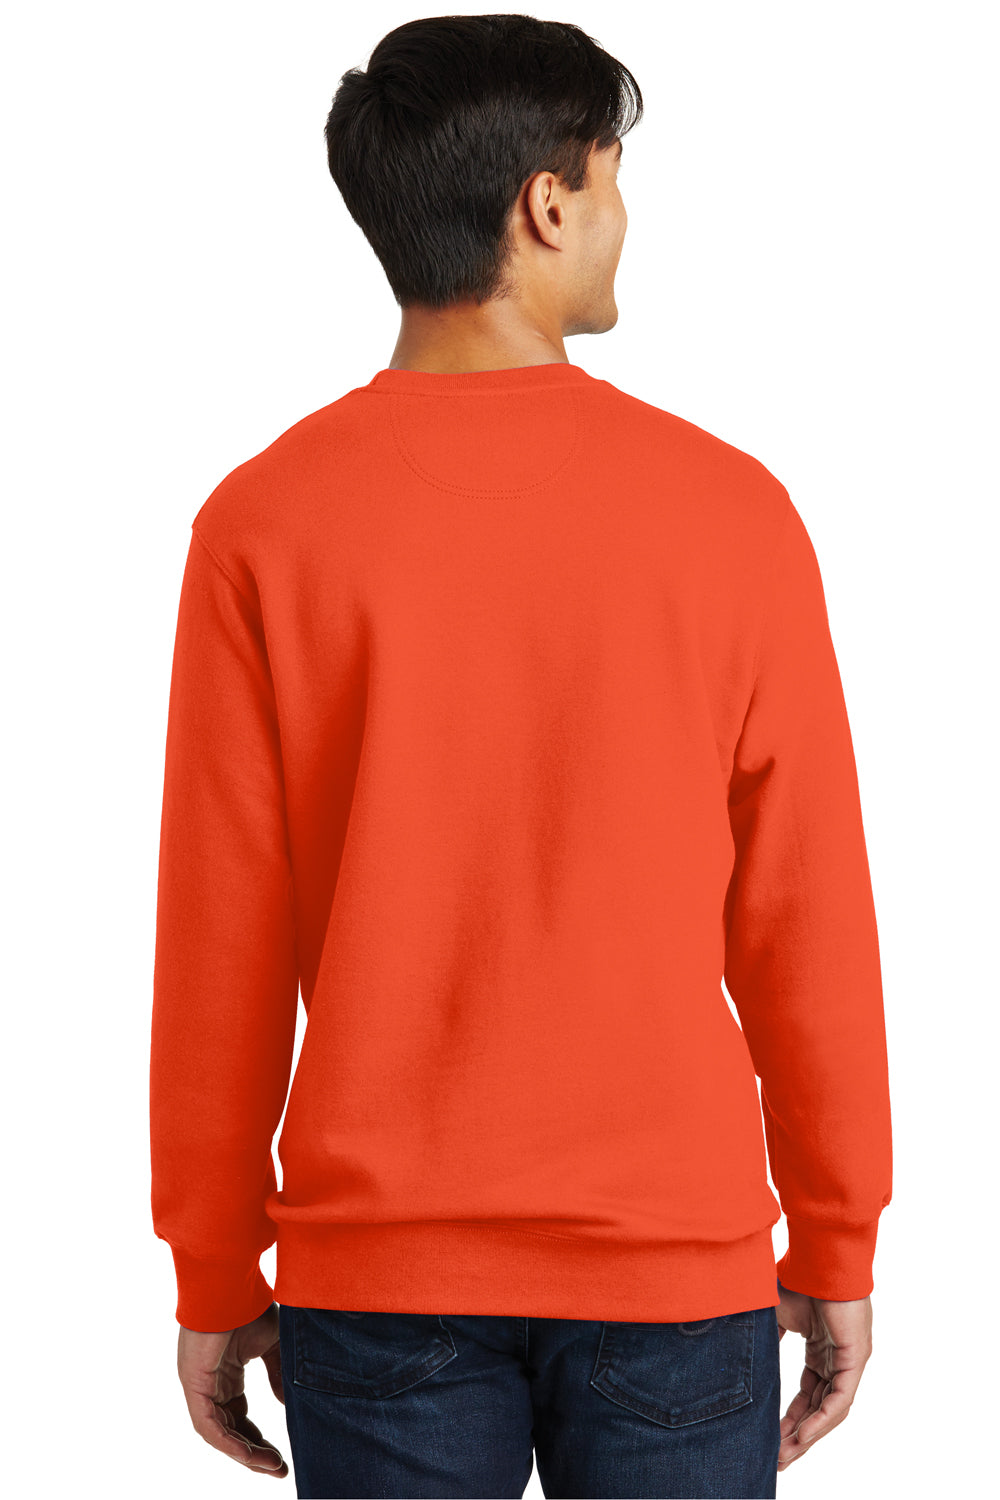 Port & Company PC850 Mens Fan Favorite Fleece Crewneck Sweatshirt Orange Back